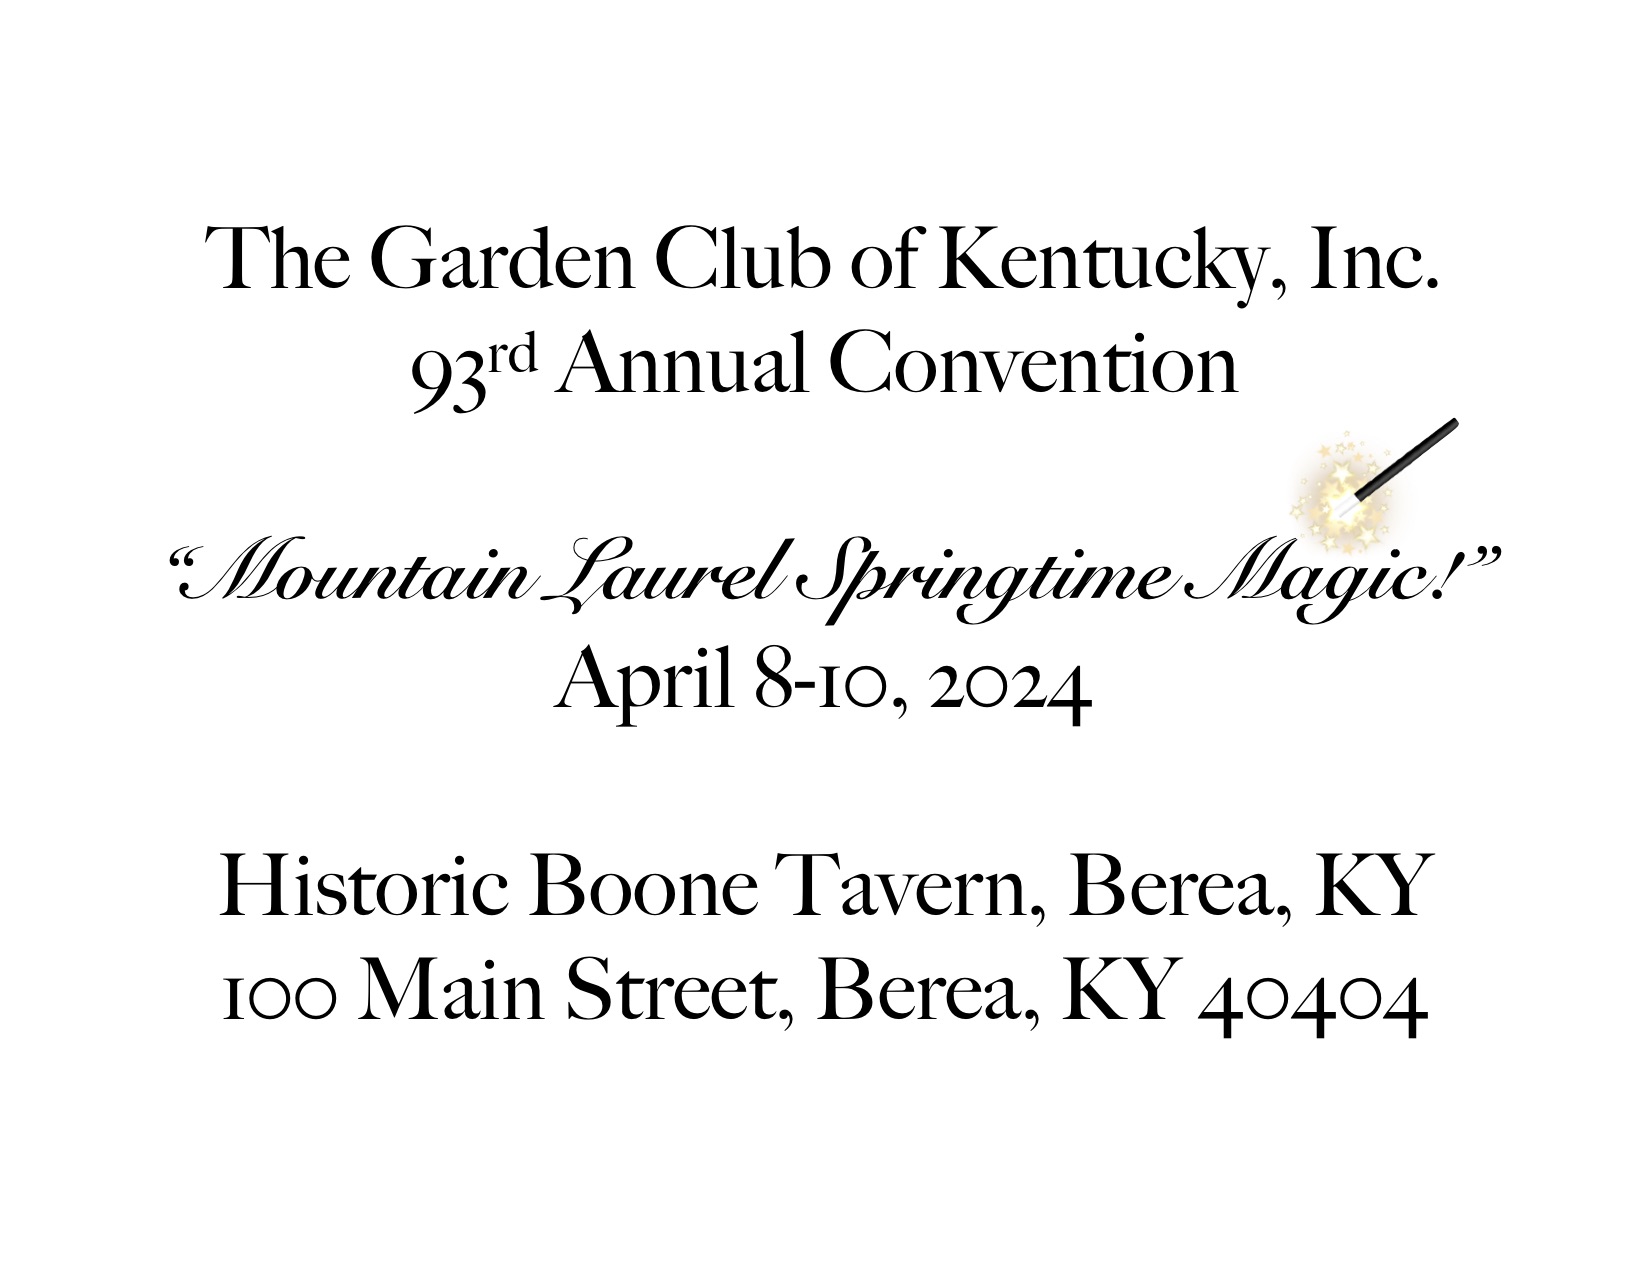 The Garden Club of Kentucky, Inc. Annual Convention